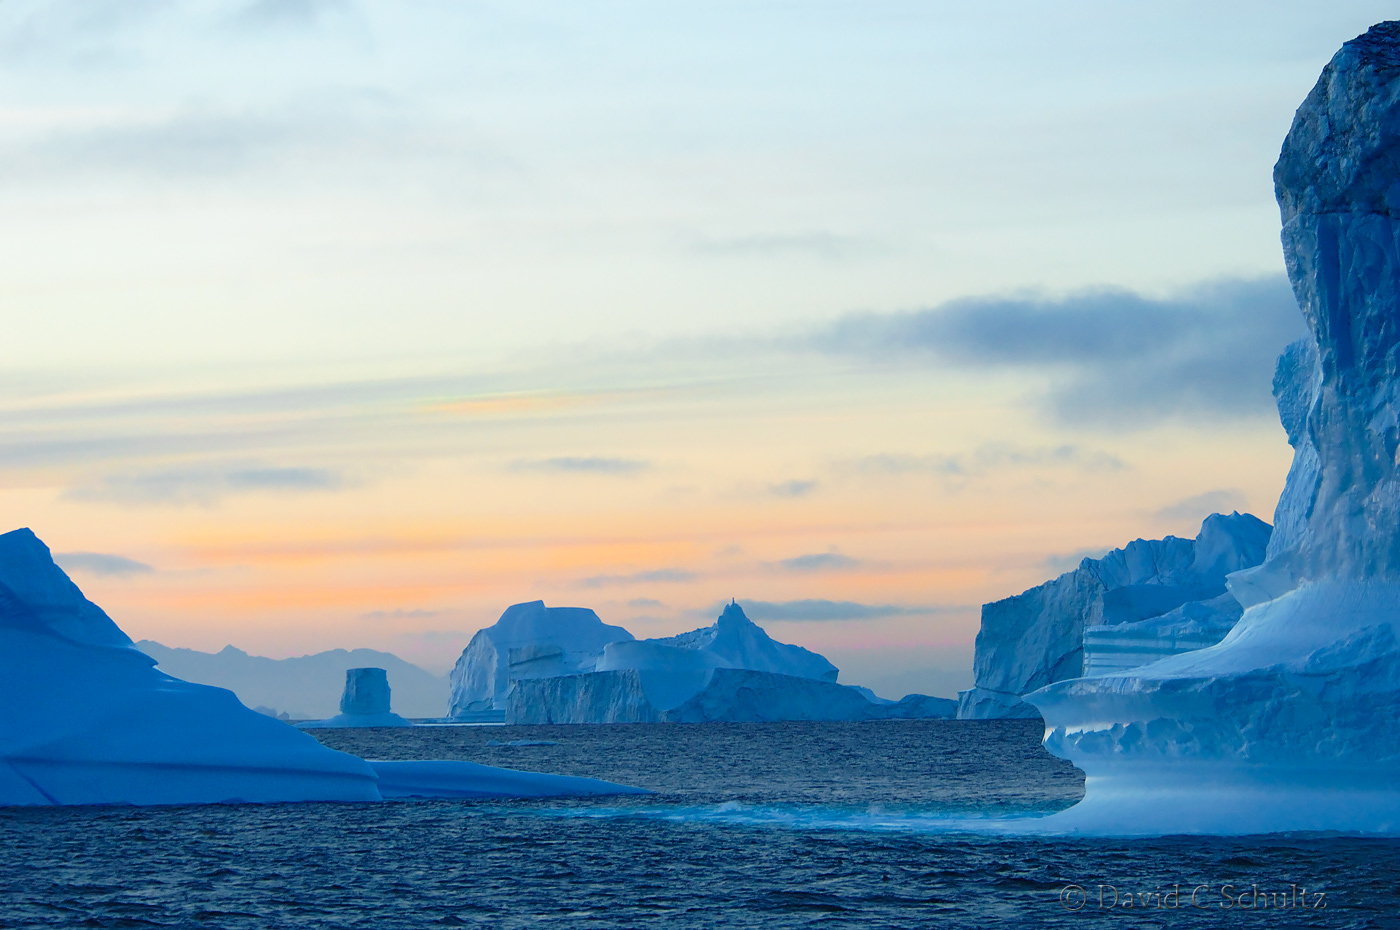 Iceberg at sunset in Scoresby Sund Fjord - Image #167-262